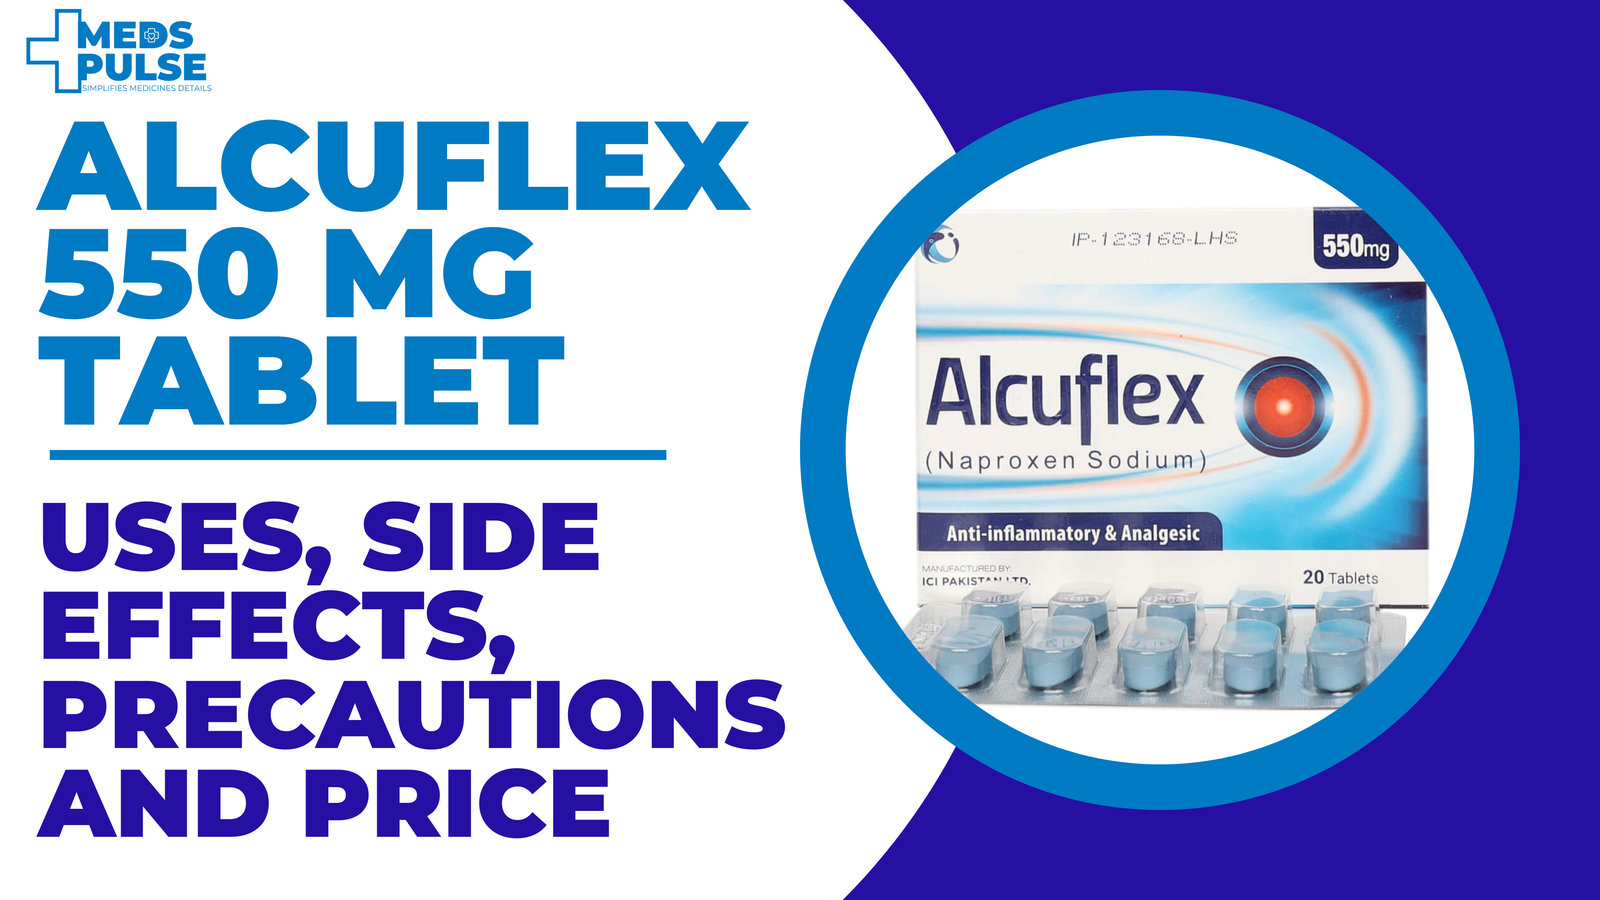 Alcuflex 550mg Tablet